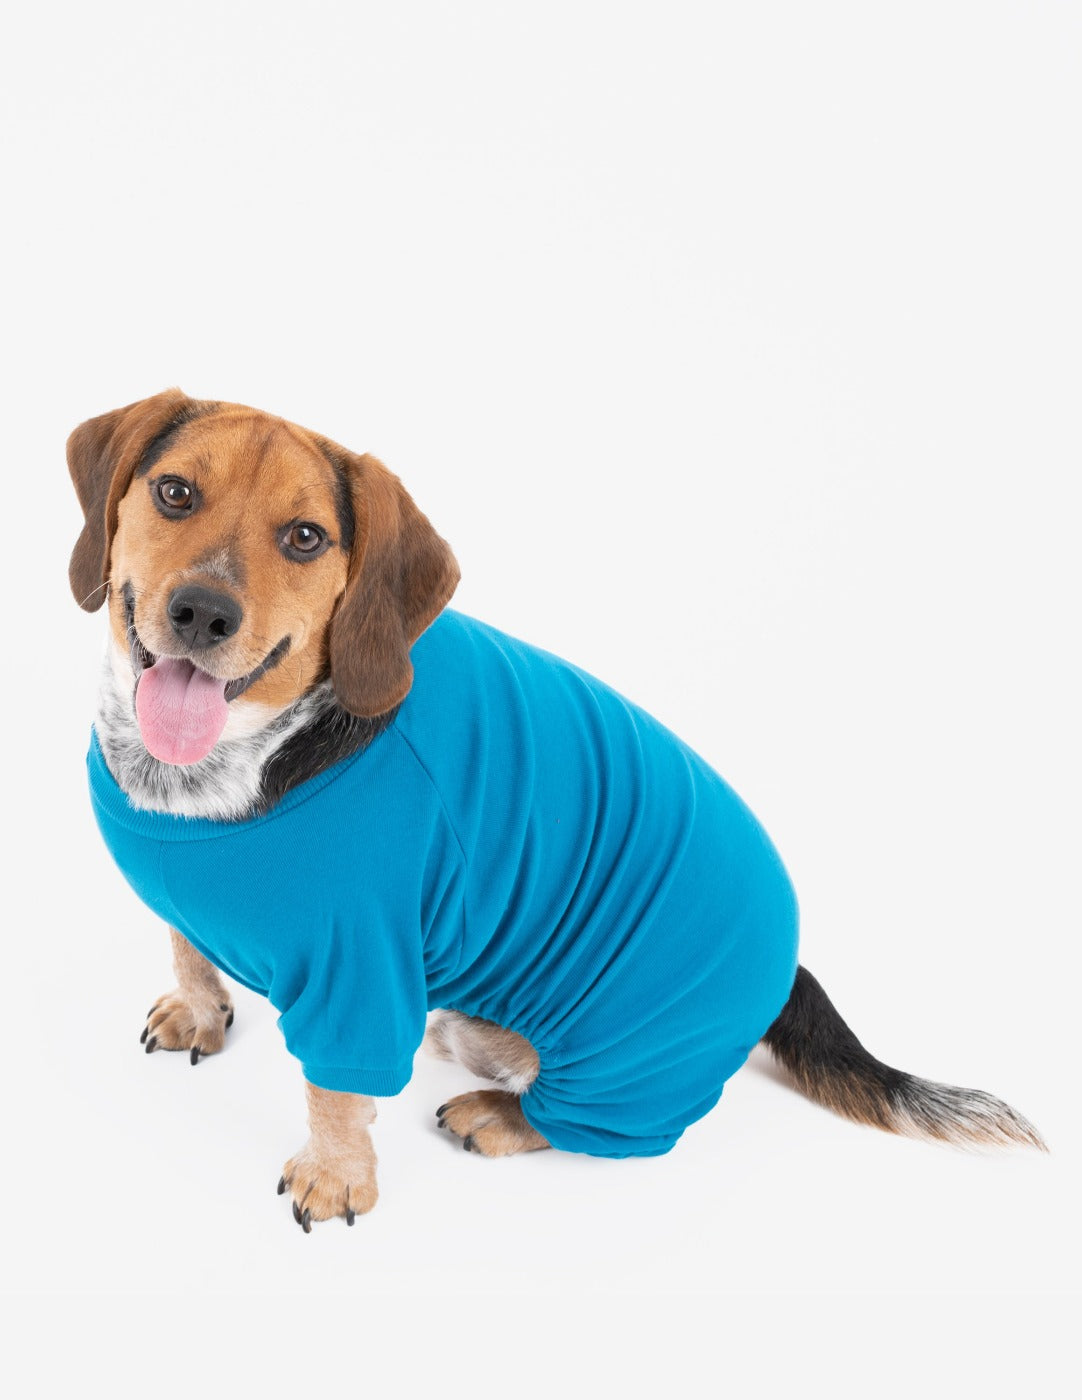 solid color teal blue dog pajamas